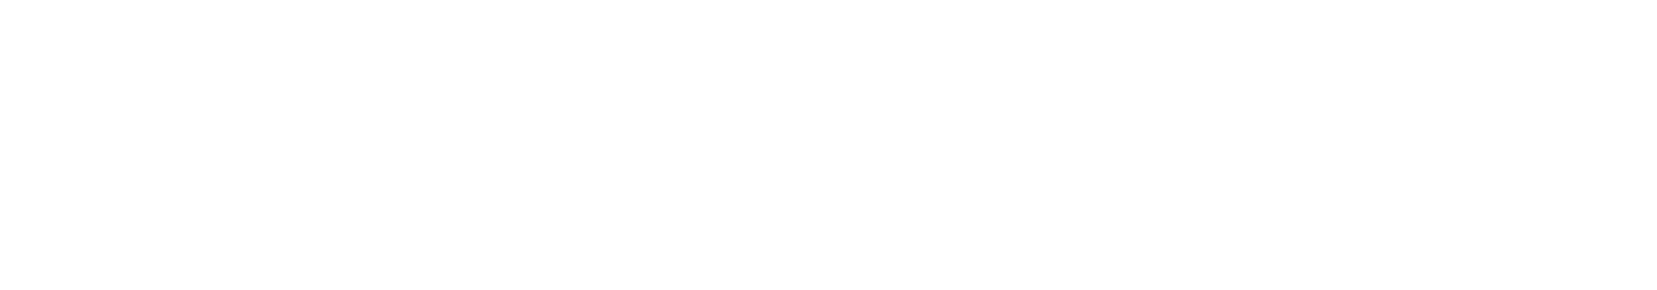 Sartorius logo large for dark backgrounds (transparent PNG)